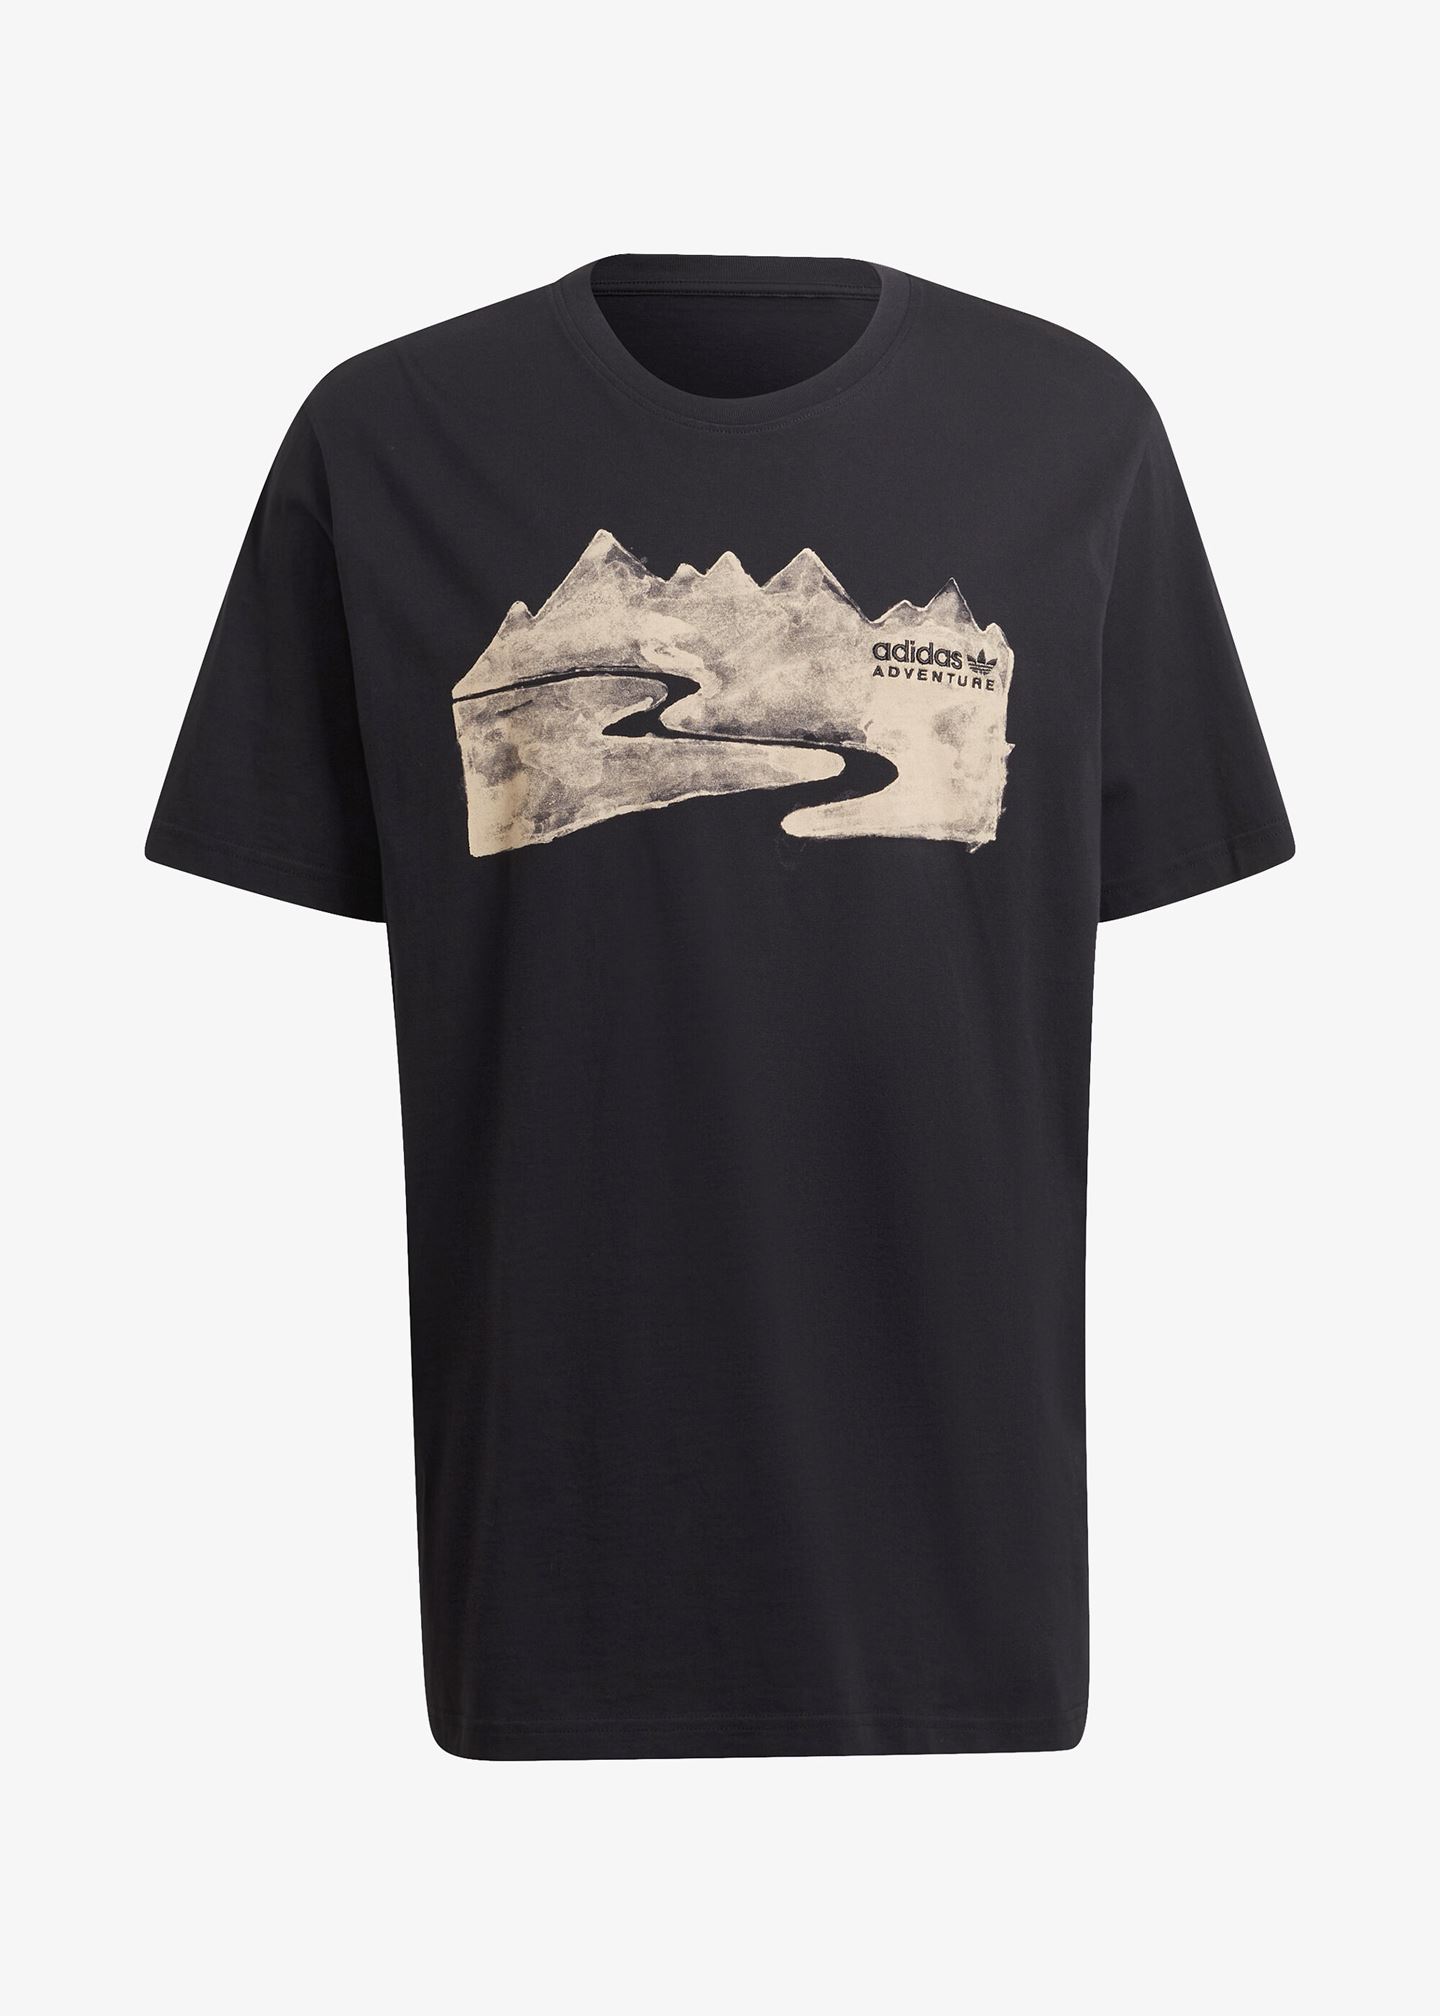 T-Shirt «Adidas Adventure Mountain Ink»